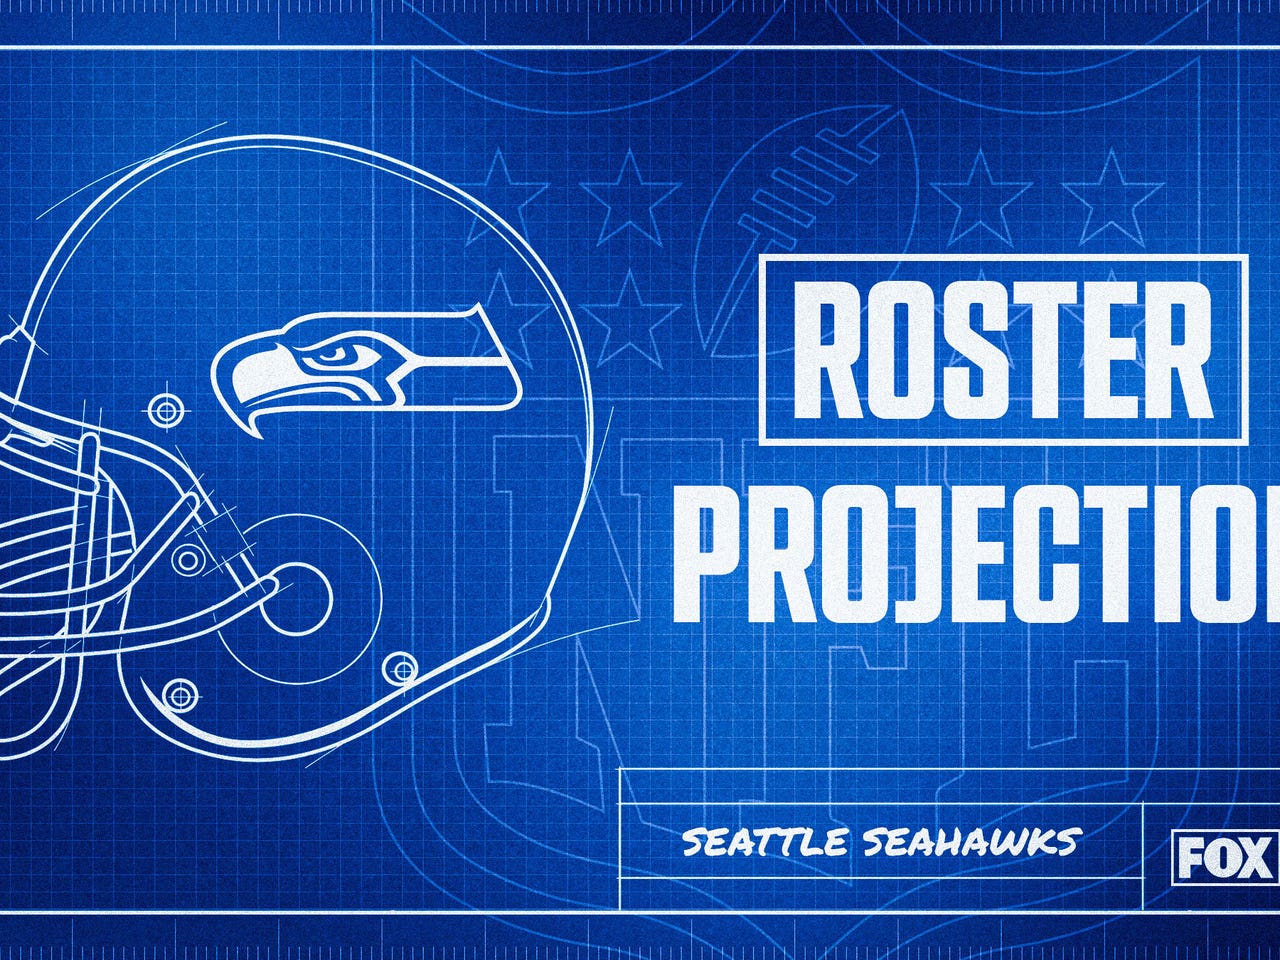 seattle seahawks roster 2022